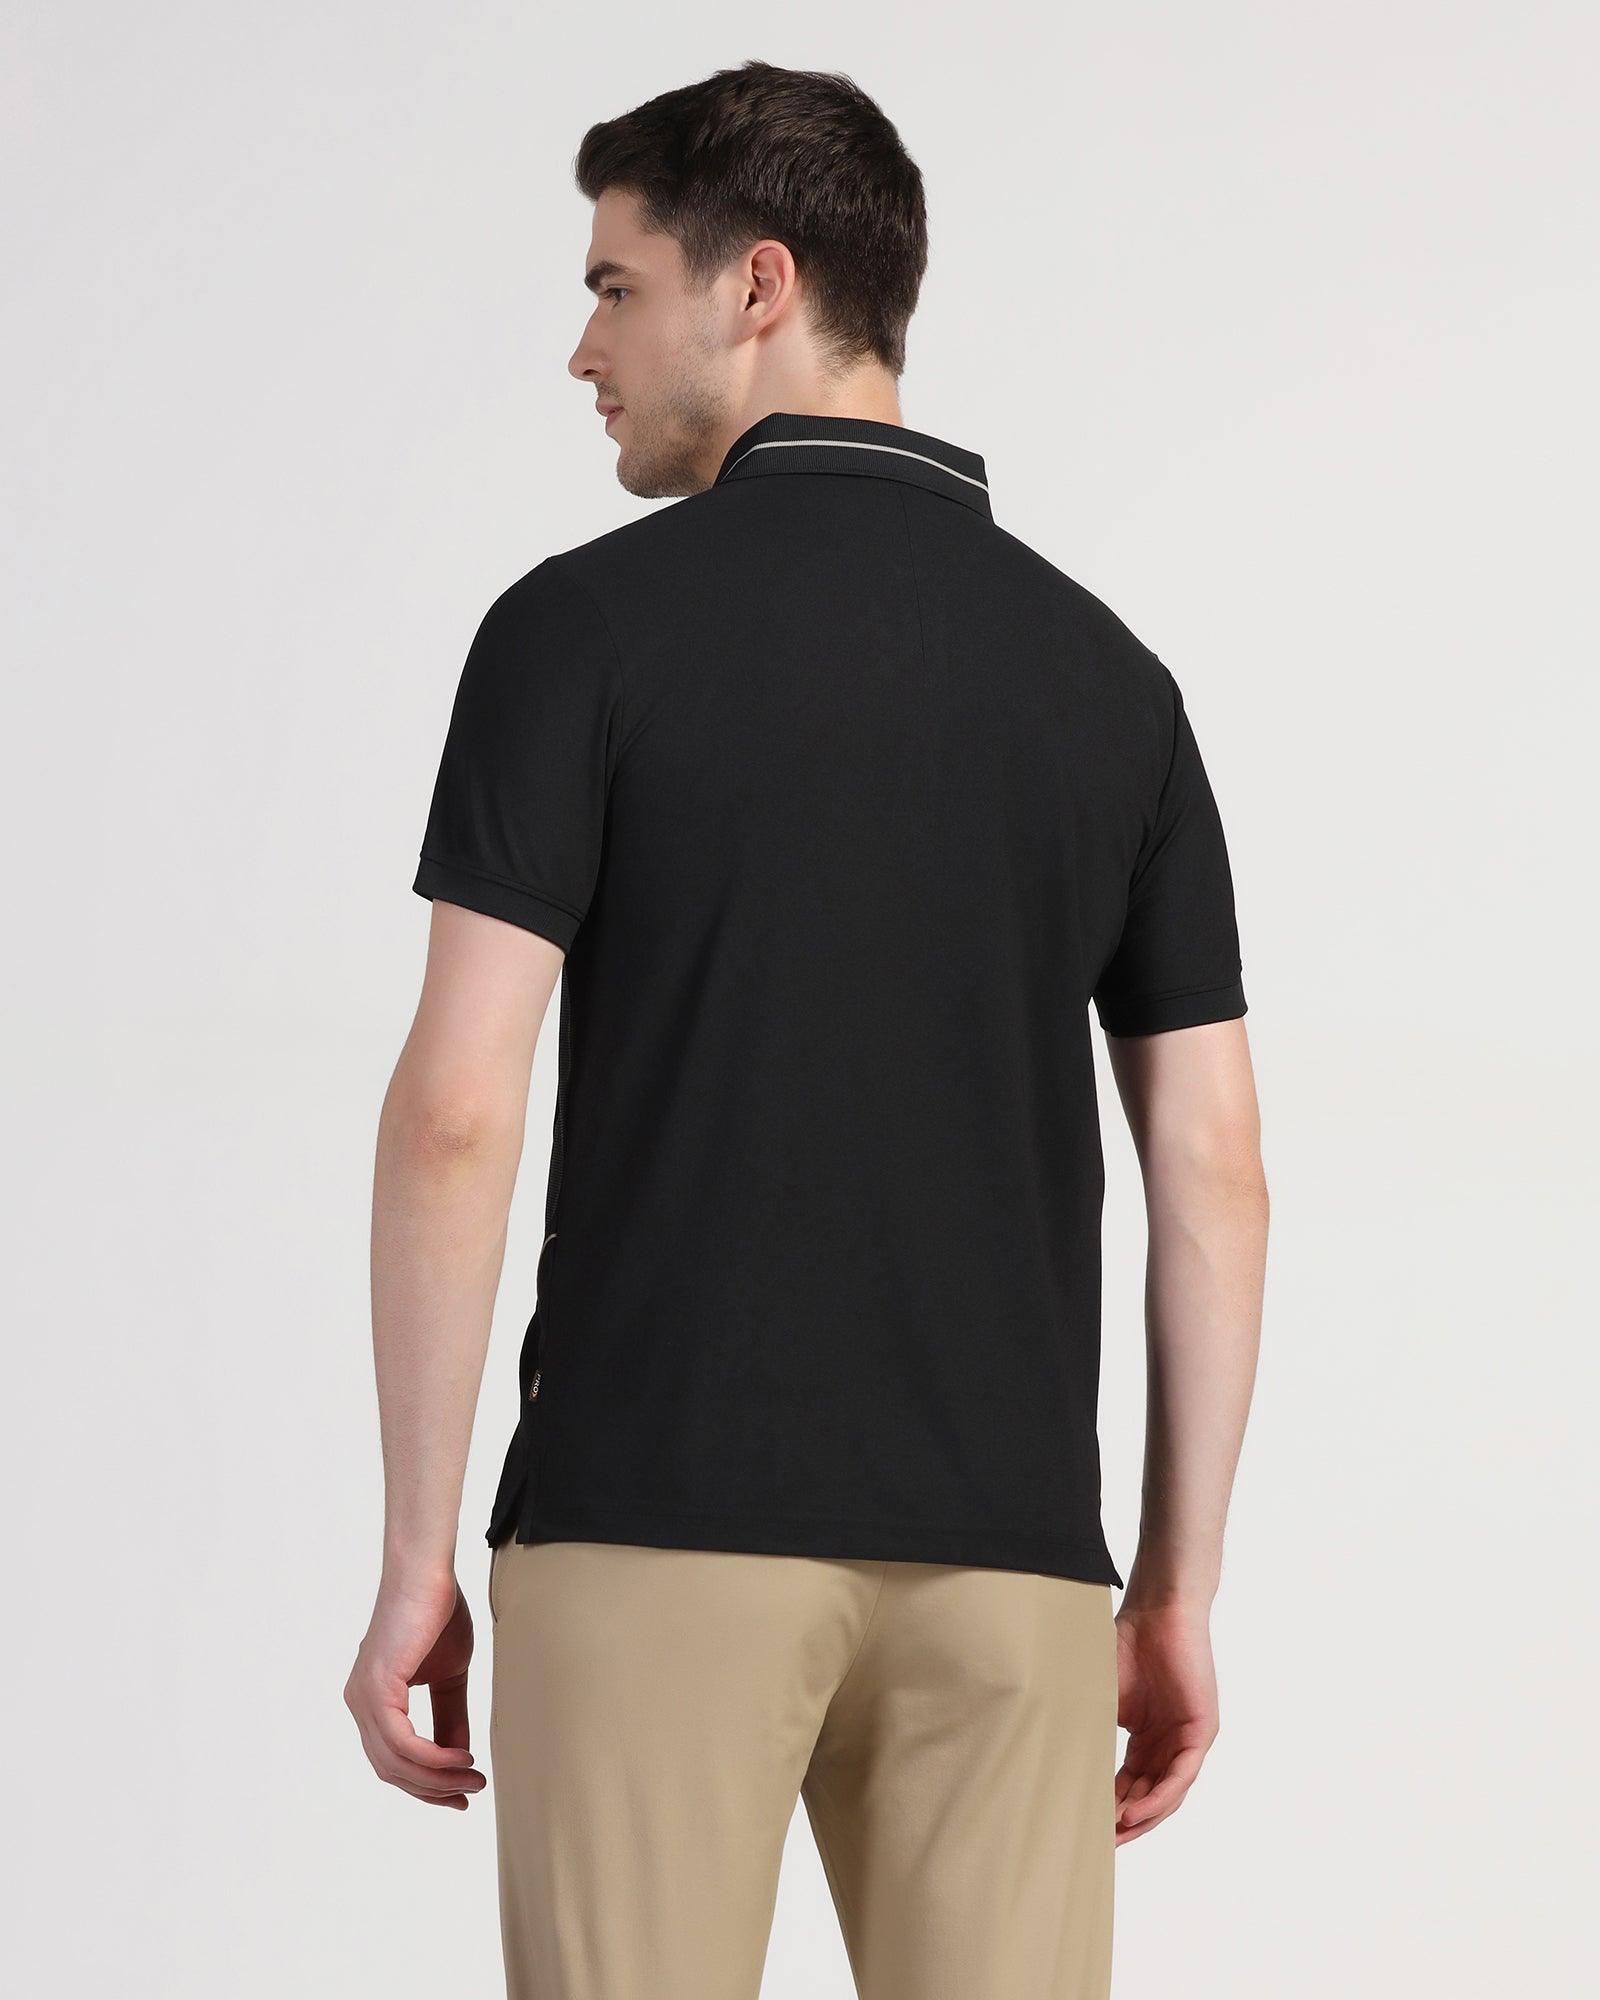 TechPro Polo Black Solid T-Shirt - Weber